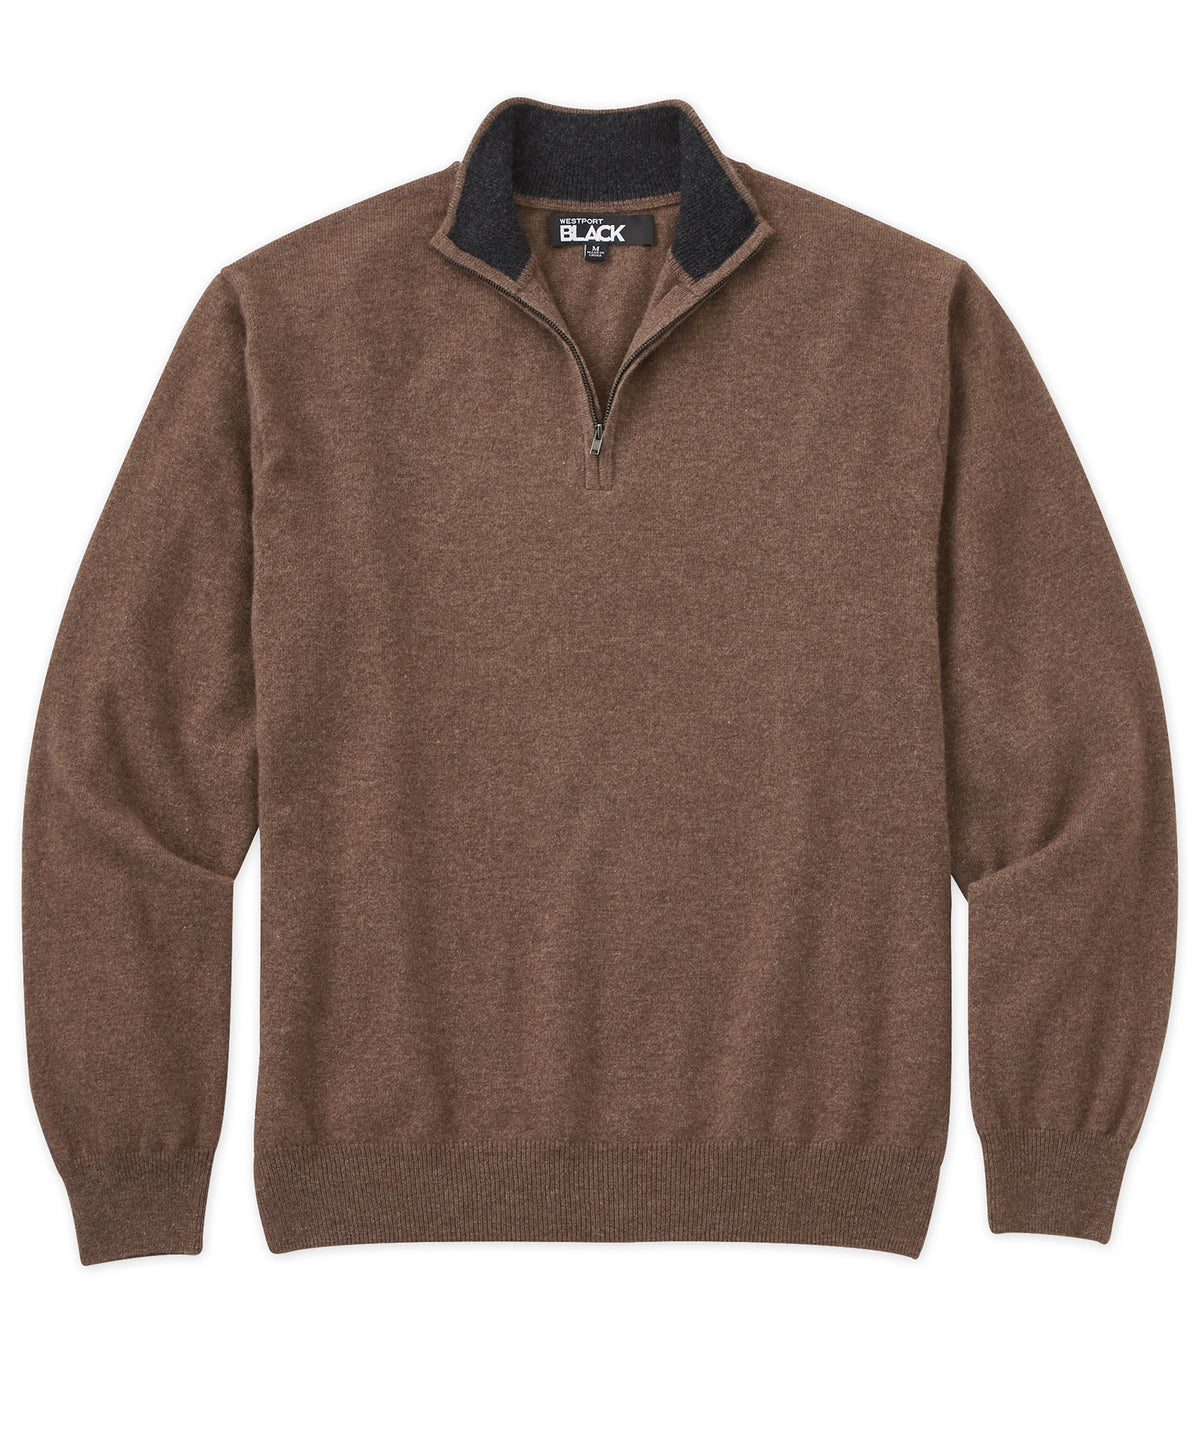 Westport Black Cashmere Quarter-Zip Sweater, Big & Tall